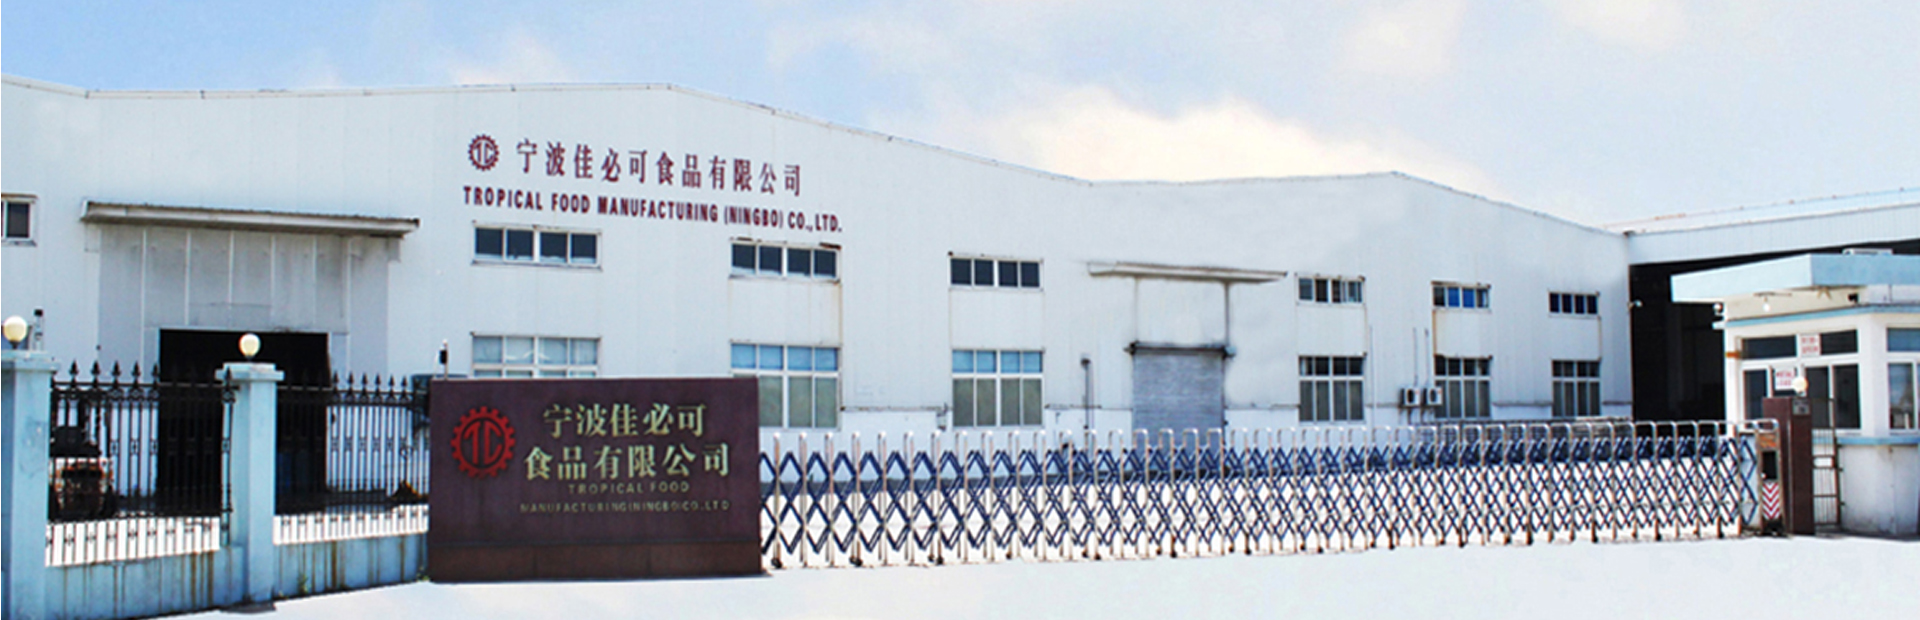 Tropical Food Manufacturing (Ningbo) Co., Ltd.